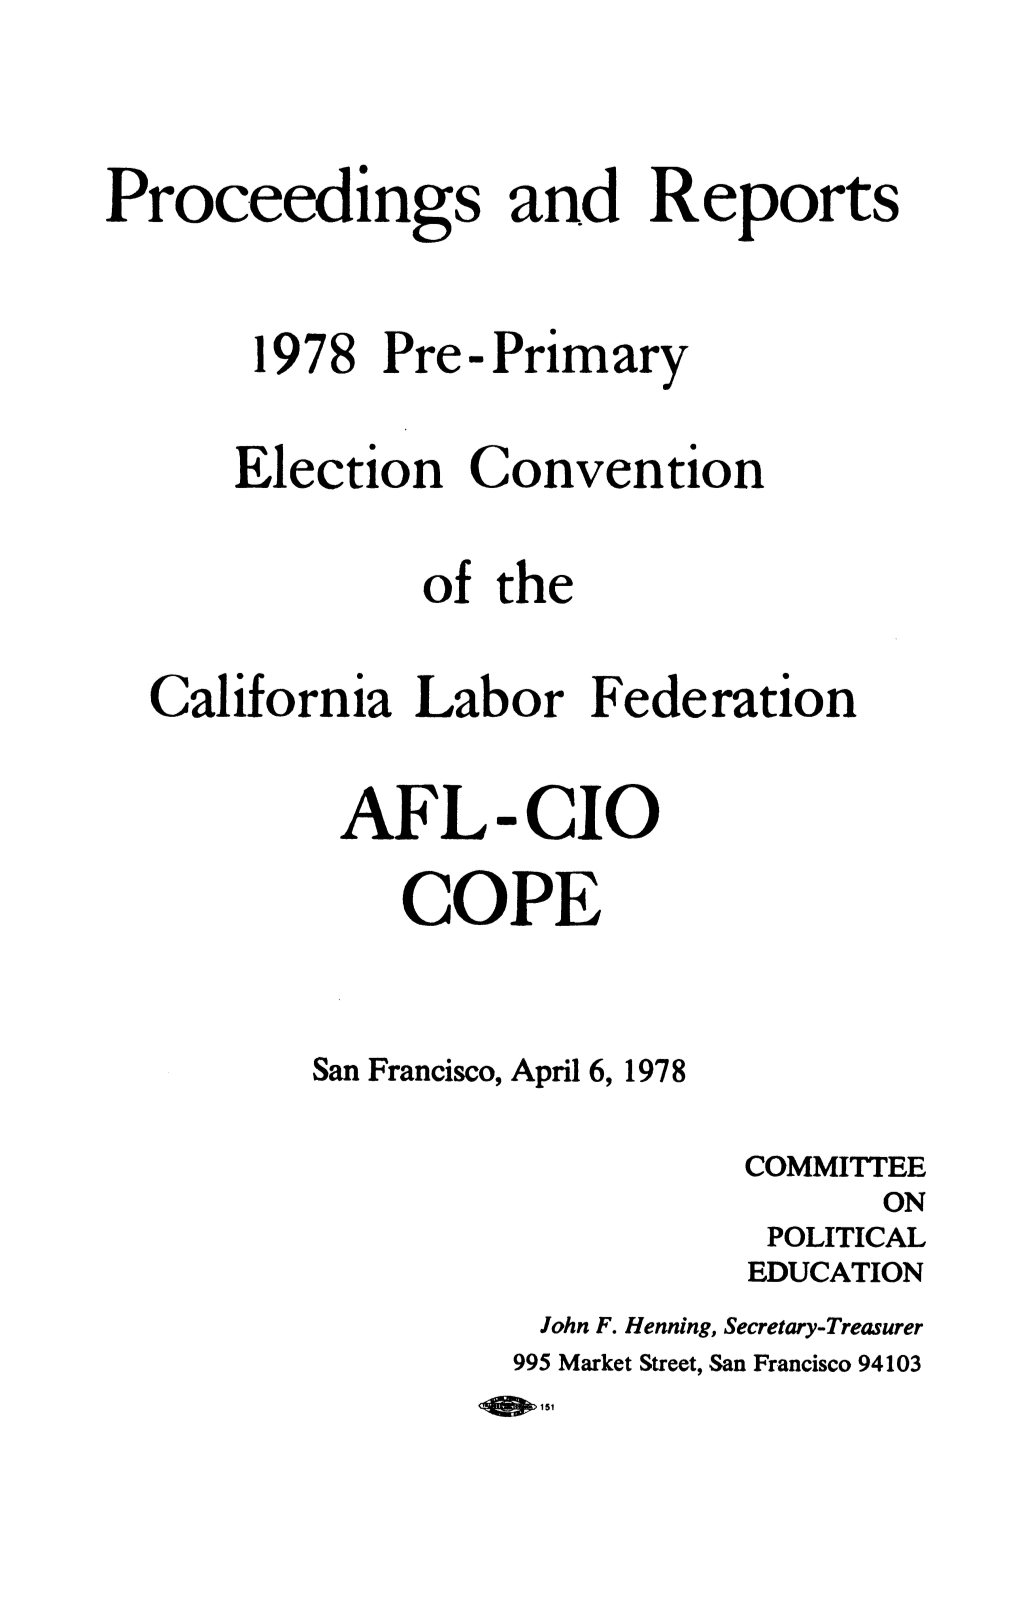 Proceedings and Reports AFL-CIO COPE